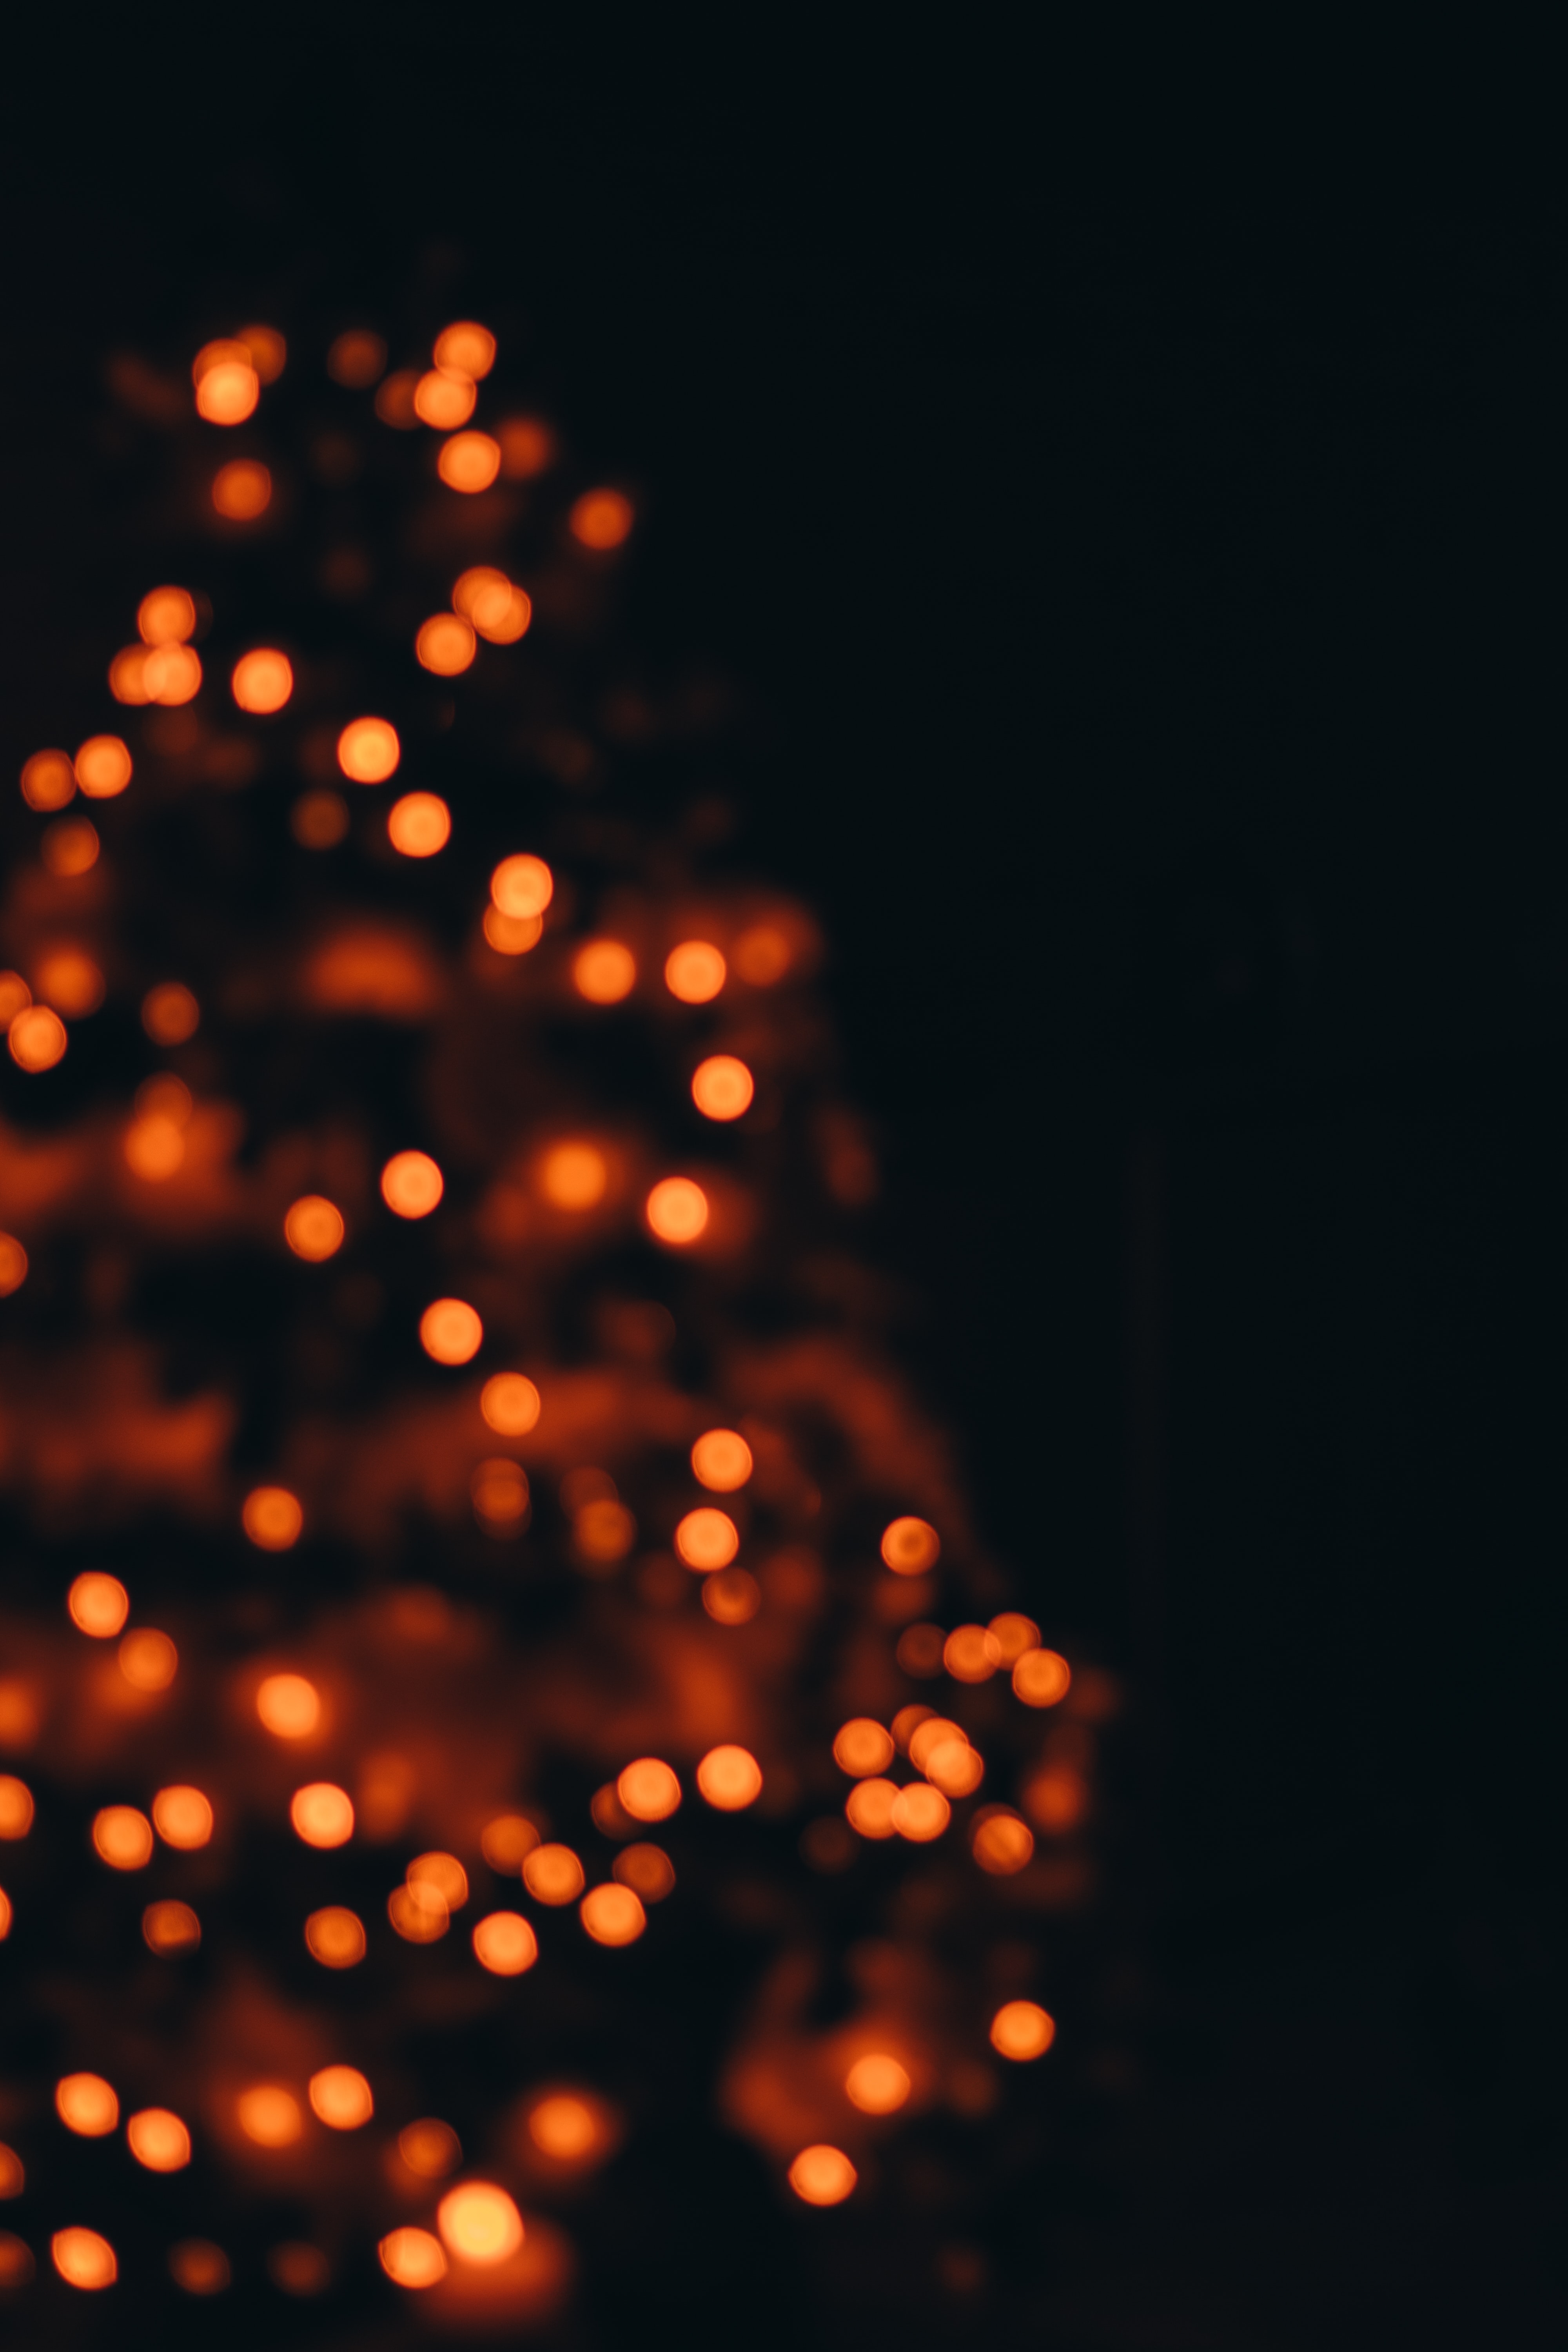 dark, smooth, boquet, lights, blur, christmas tree, garland, bokeh